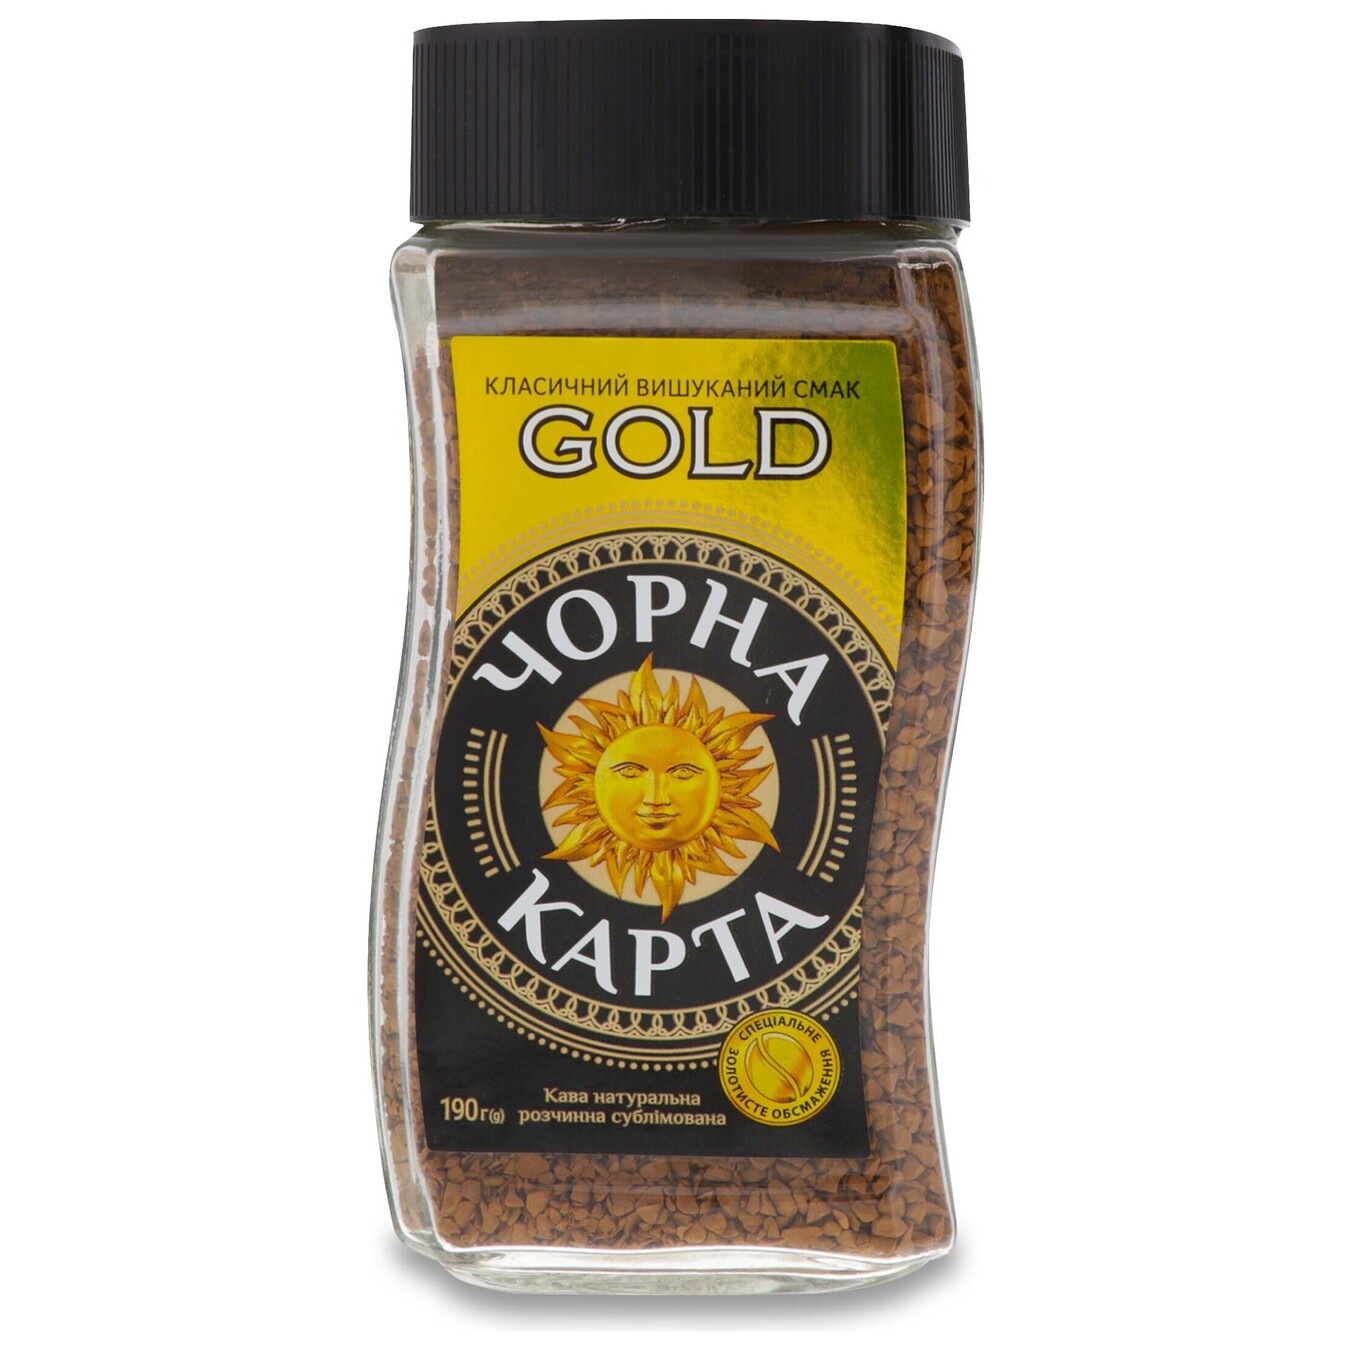 Instant coffee Black Card Gold glass jar 190g*6